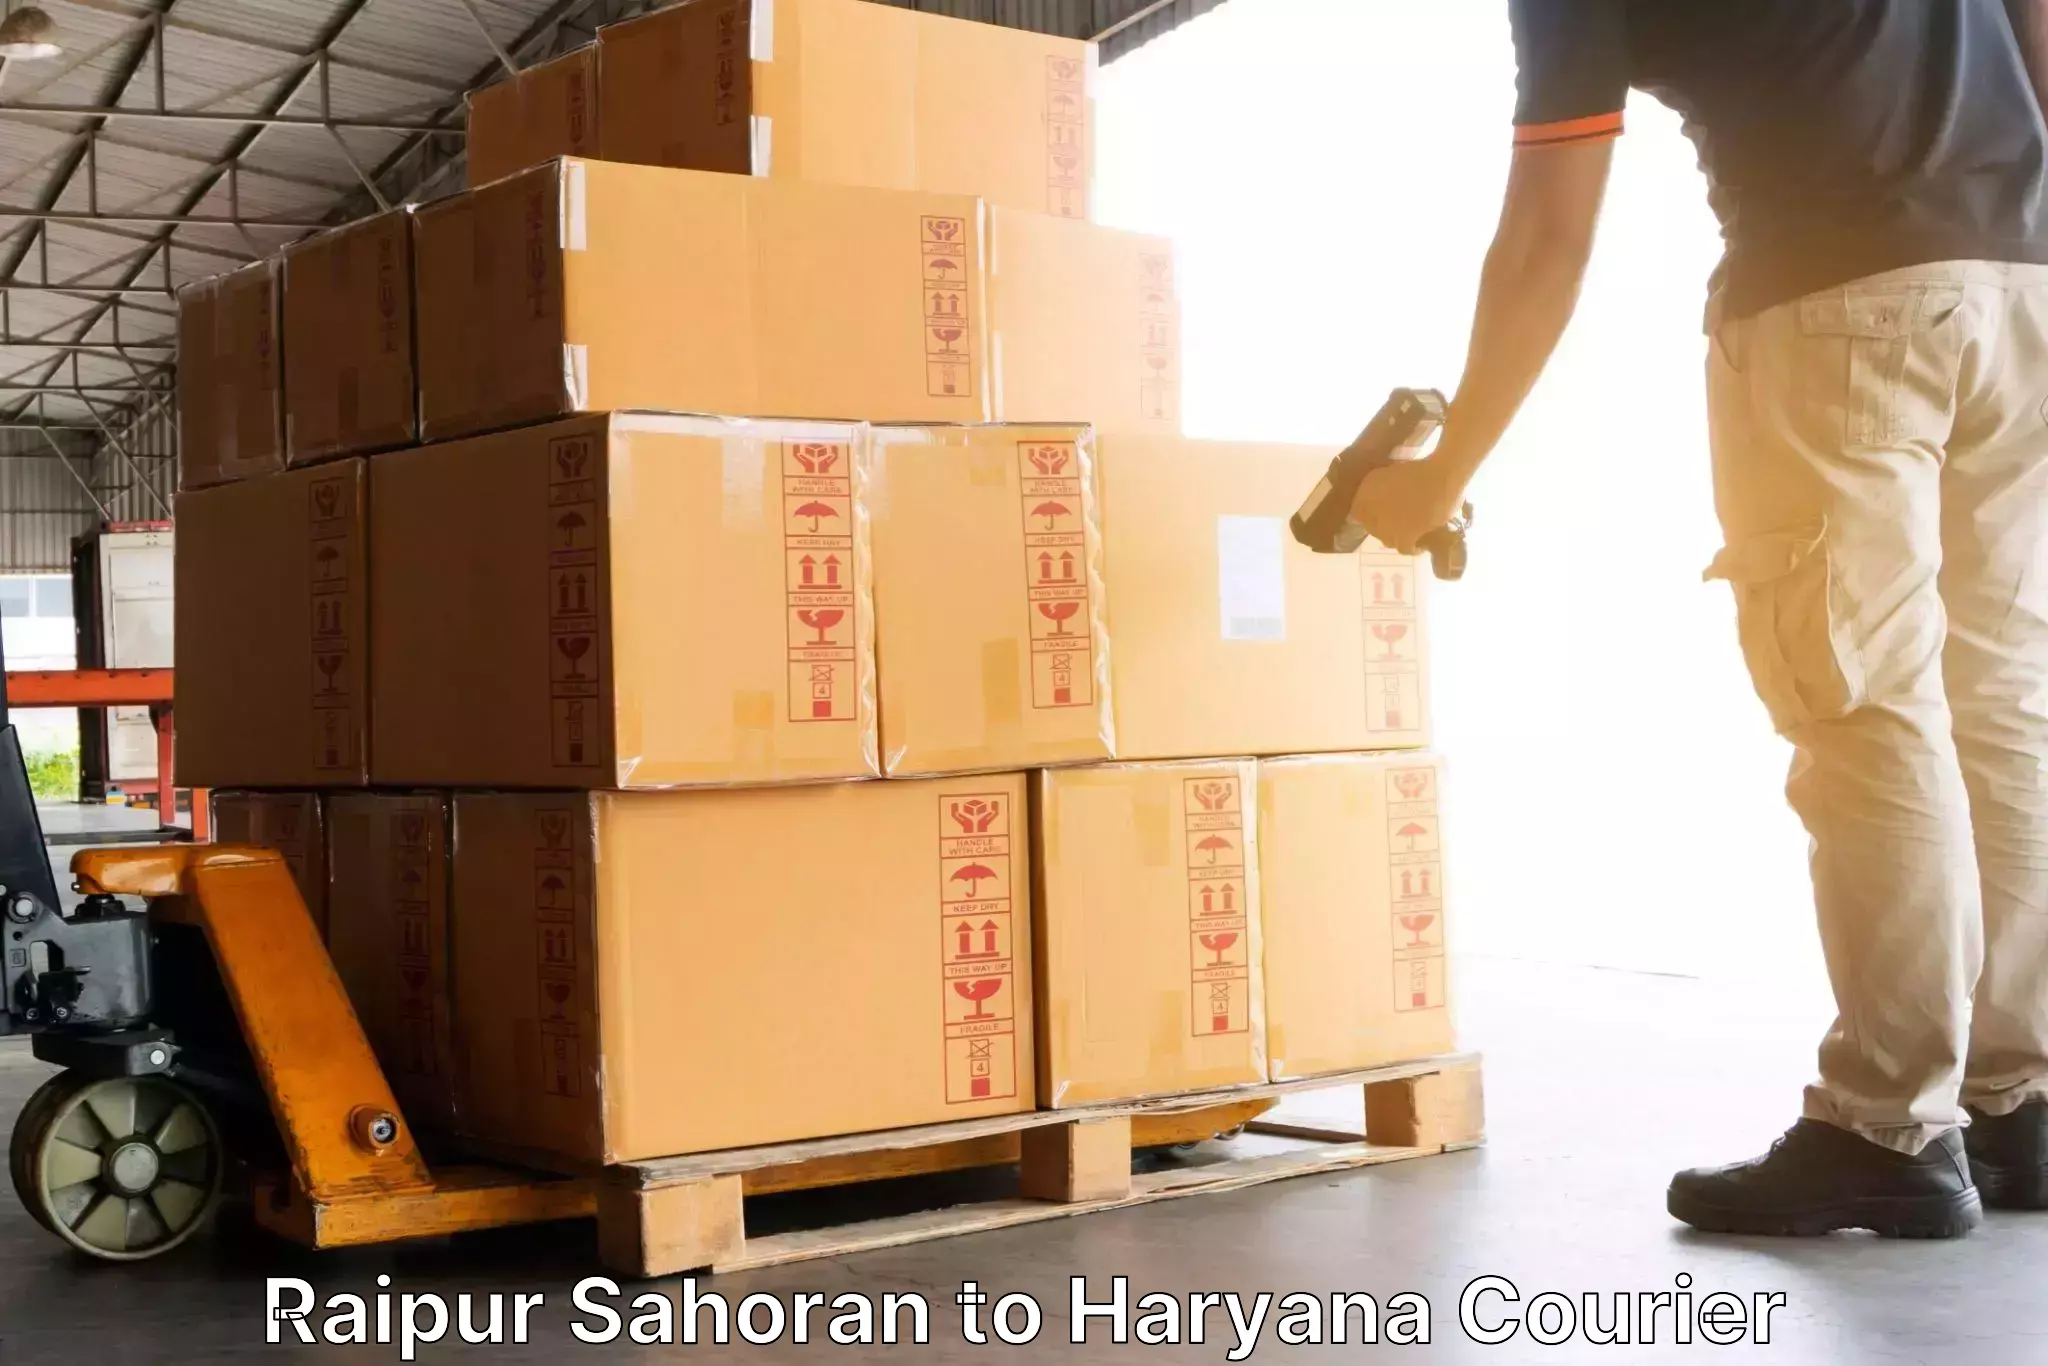 Local delivery service Raipur Sahoran to Gurgaon